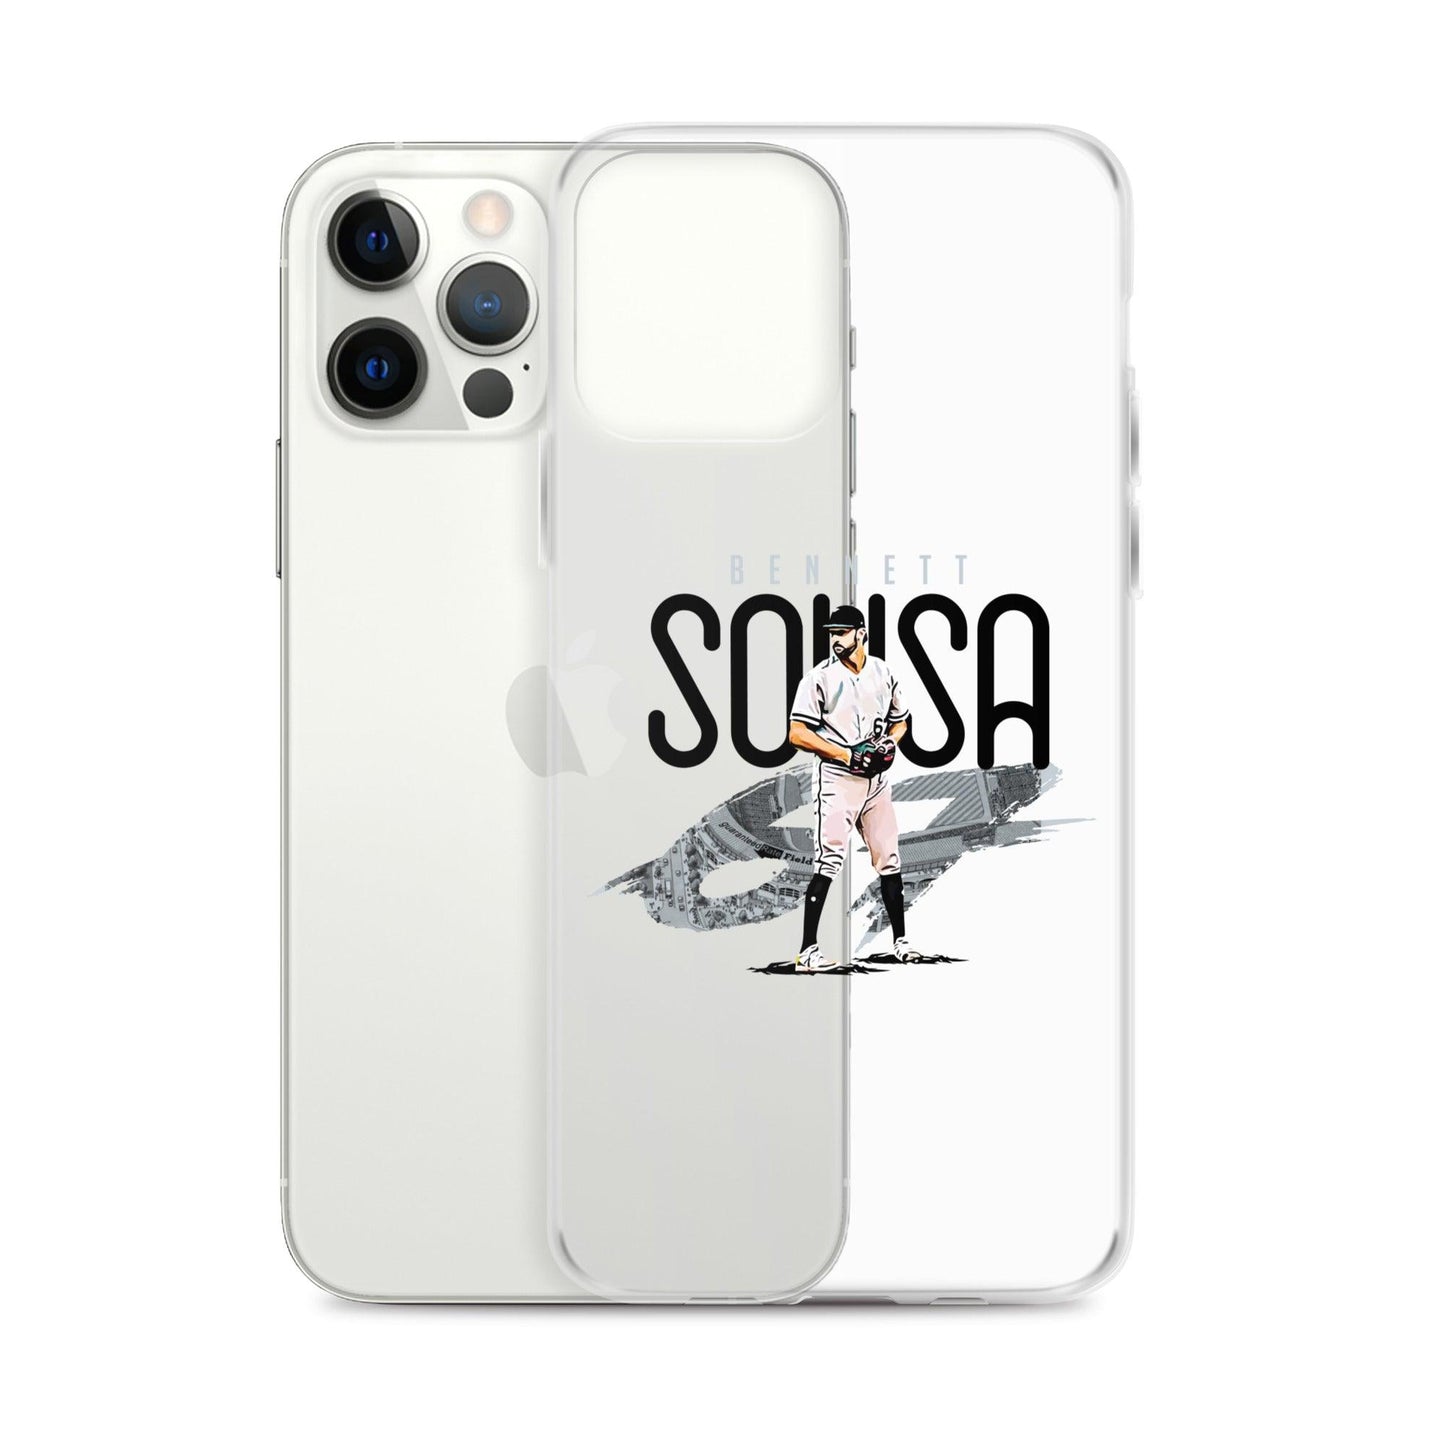 Bennett Sousa “Essential” iPhone Case - Fan Arch